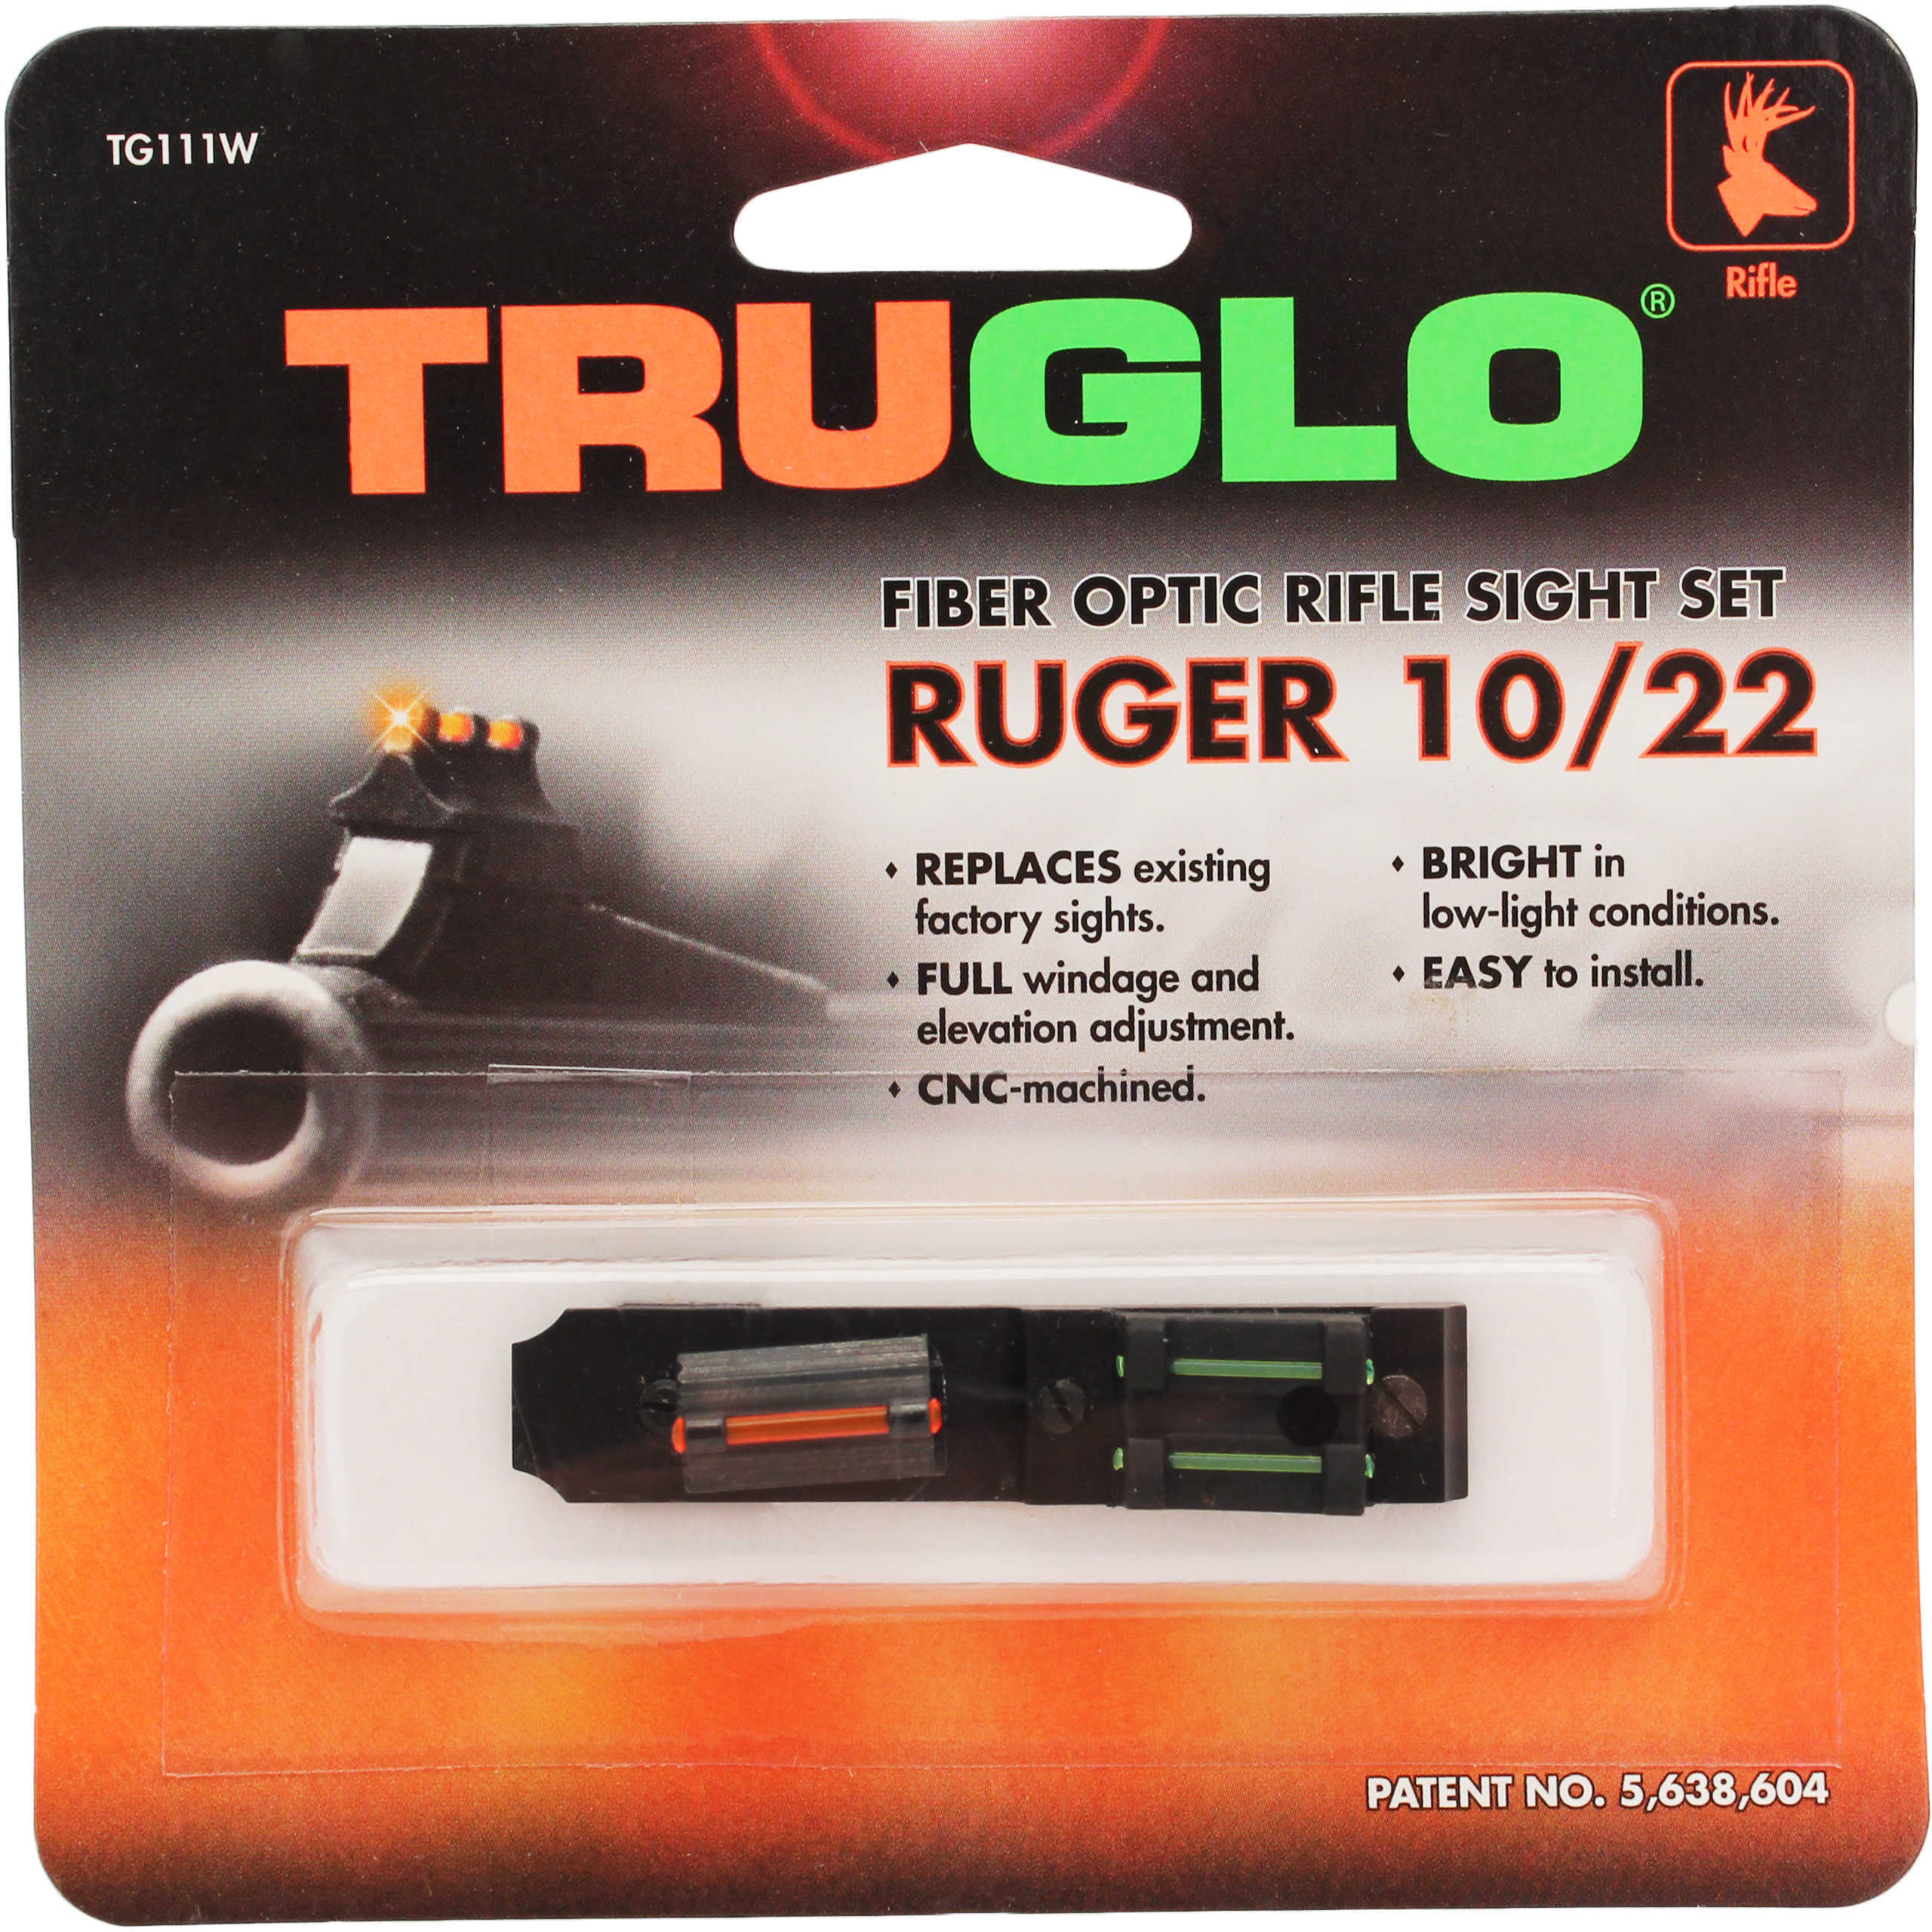 Truglo TG111W Rimfire Rifle Fiber Optic Set Ruger 10/22 Red Front Green Rear Black